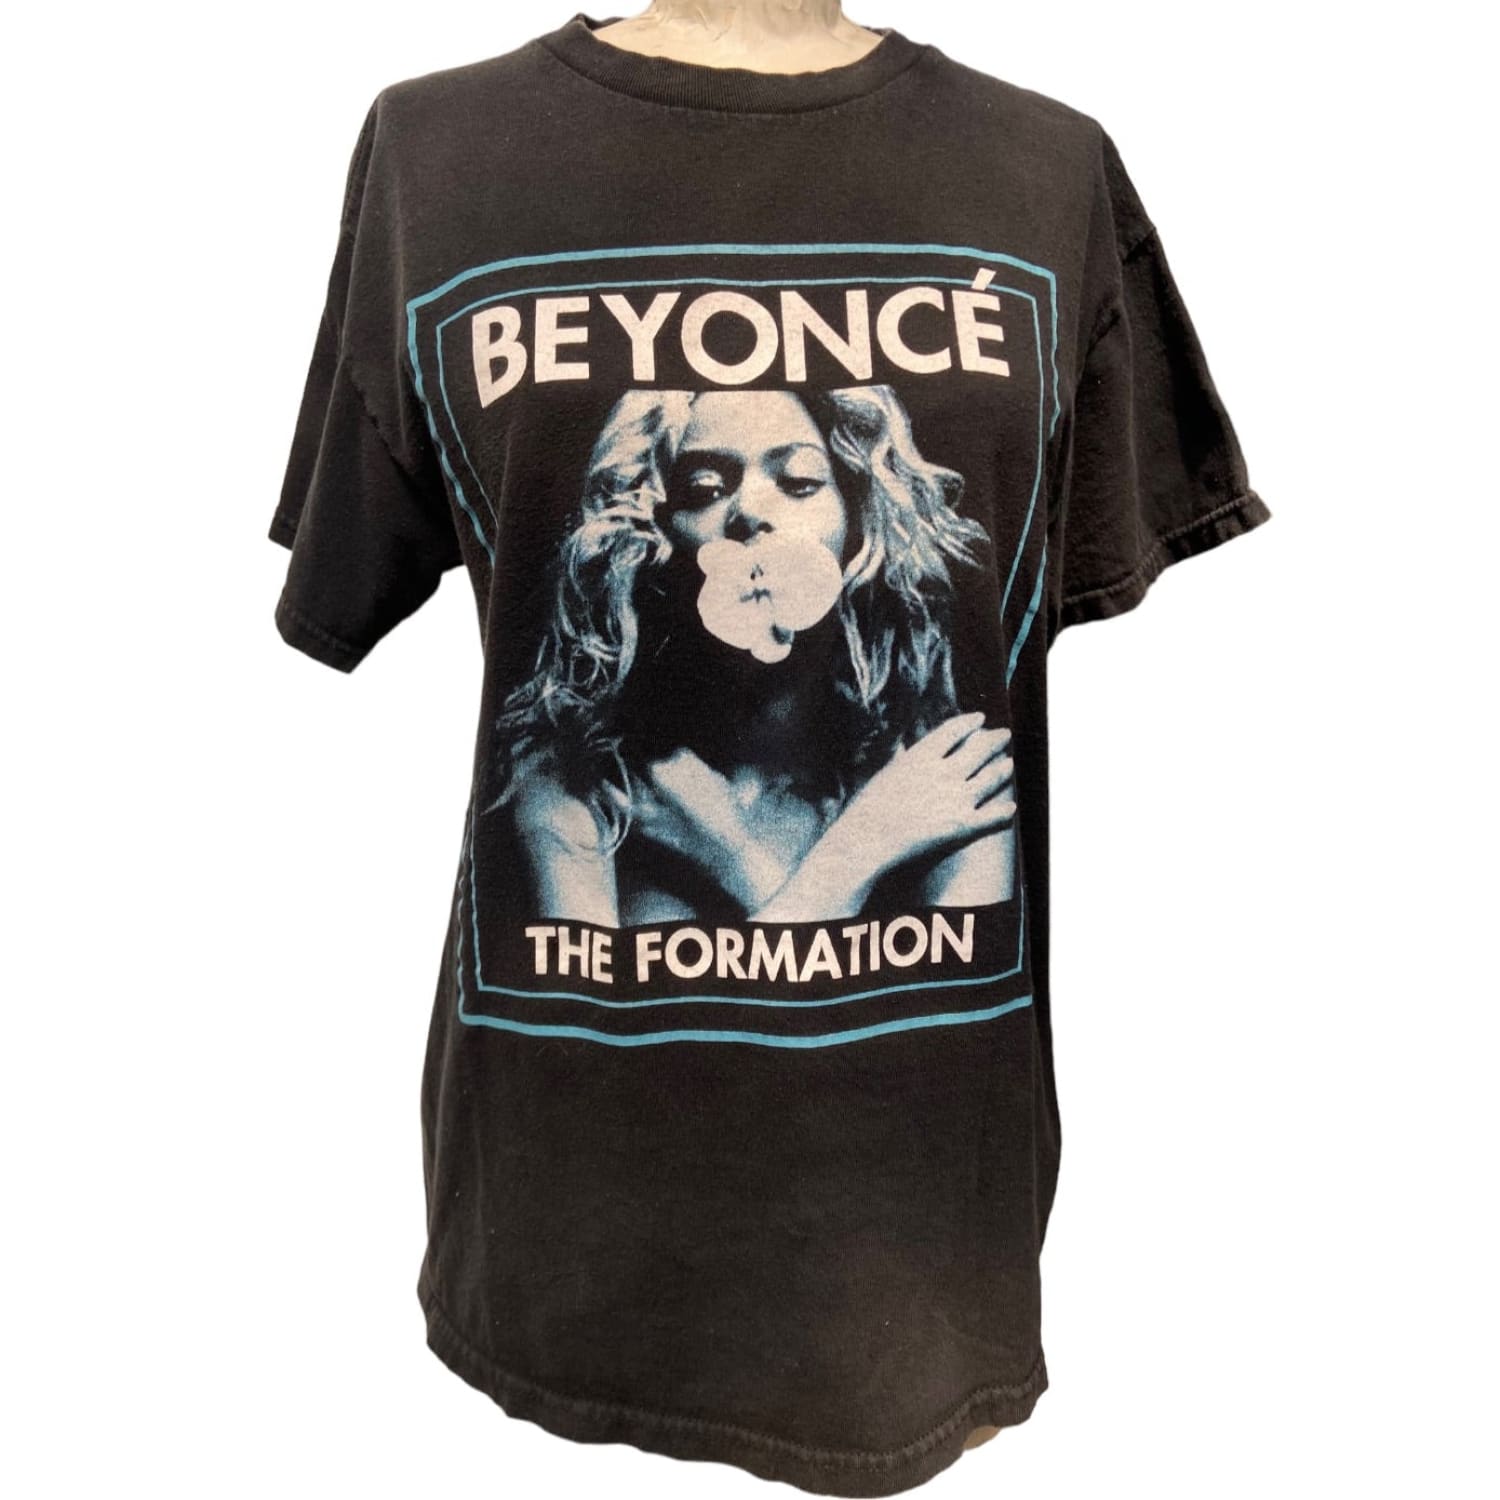 Beyonce t shirt